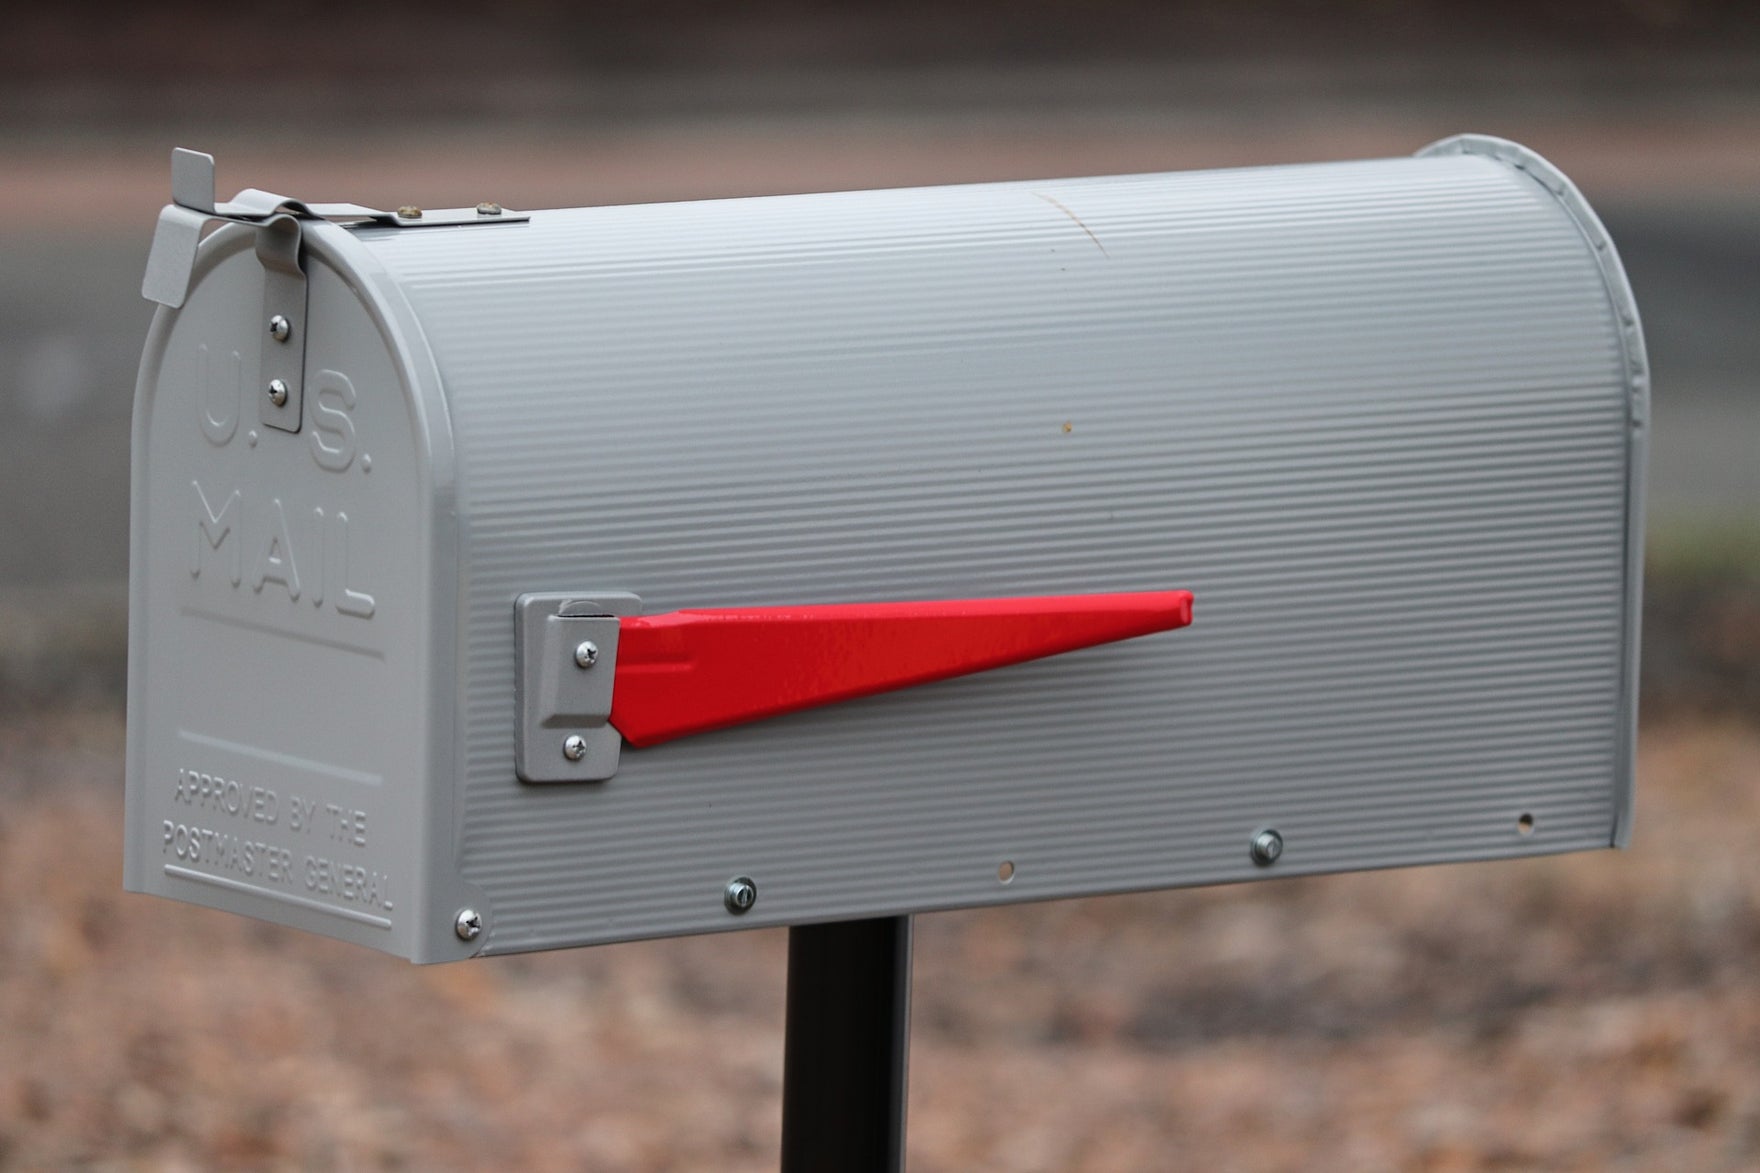 postbox